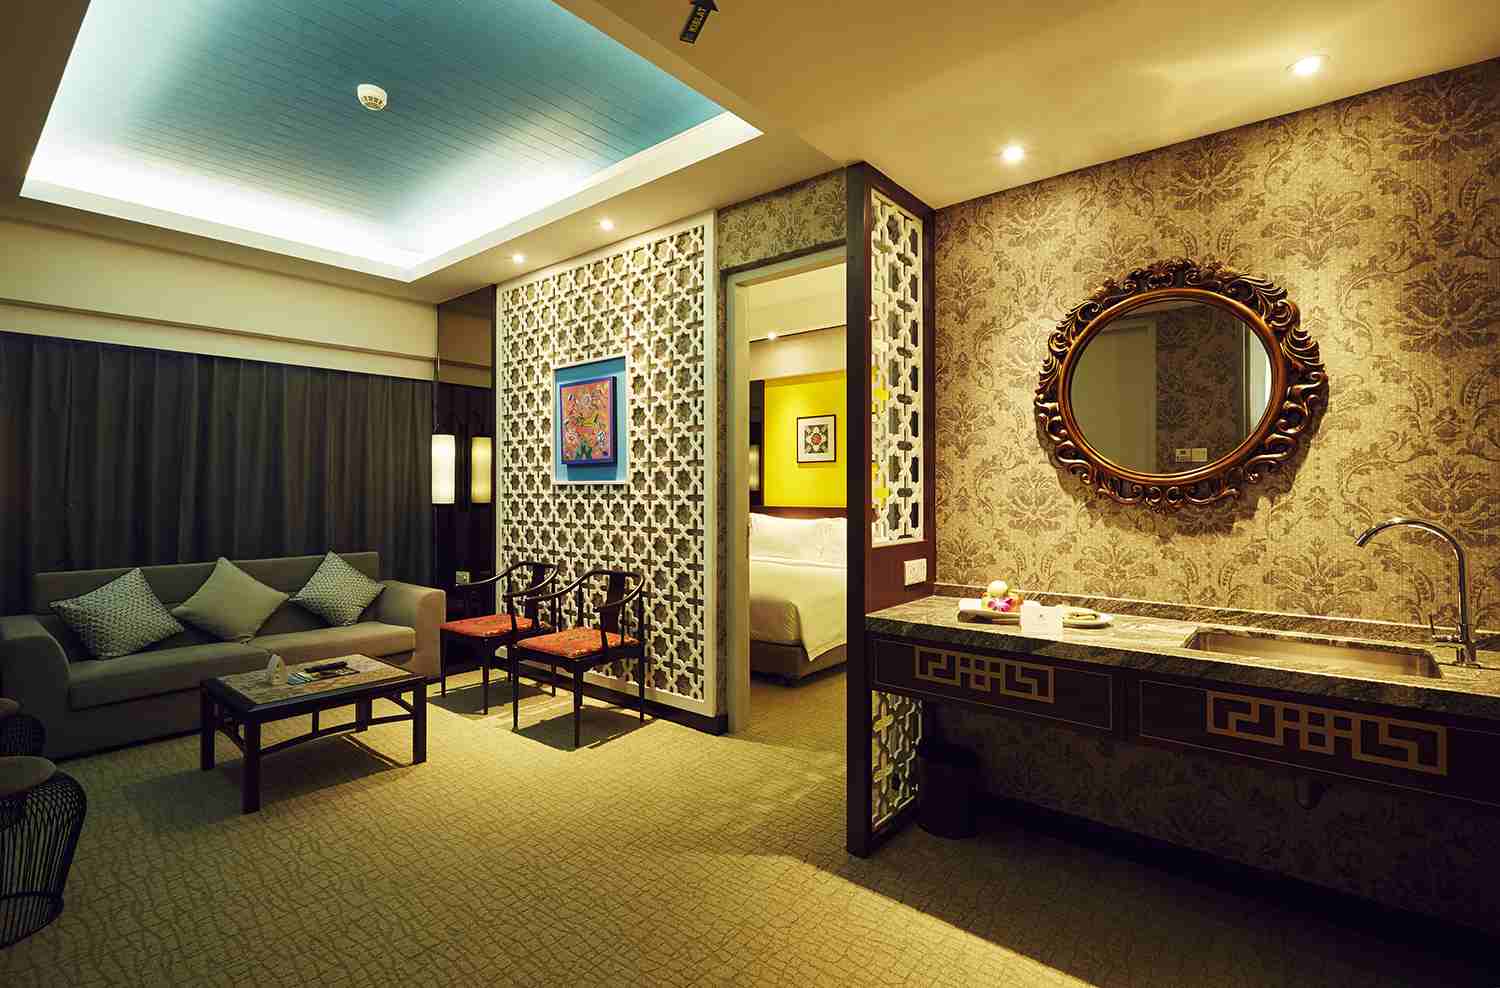 Estadia Hotel Malacca hotel room